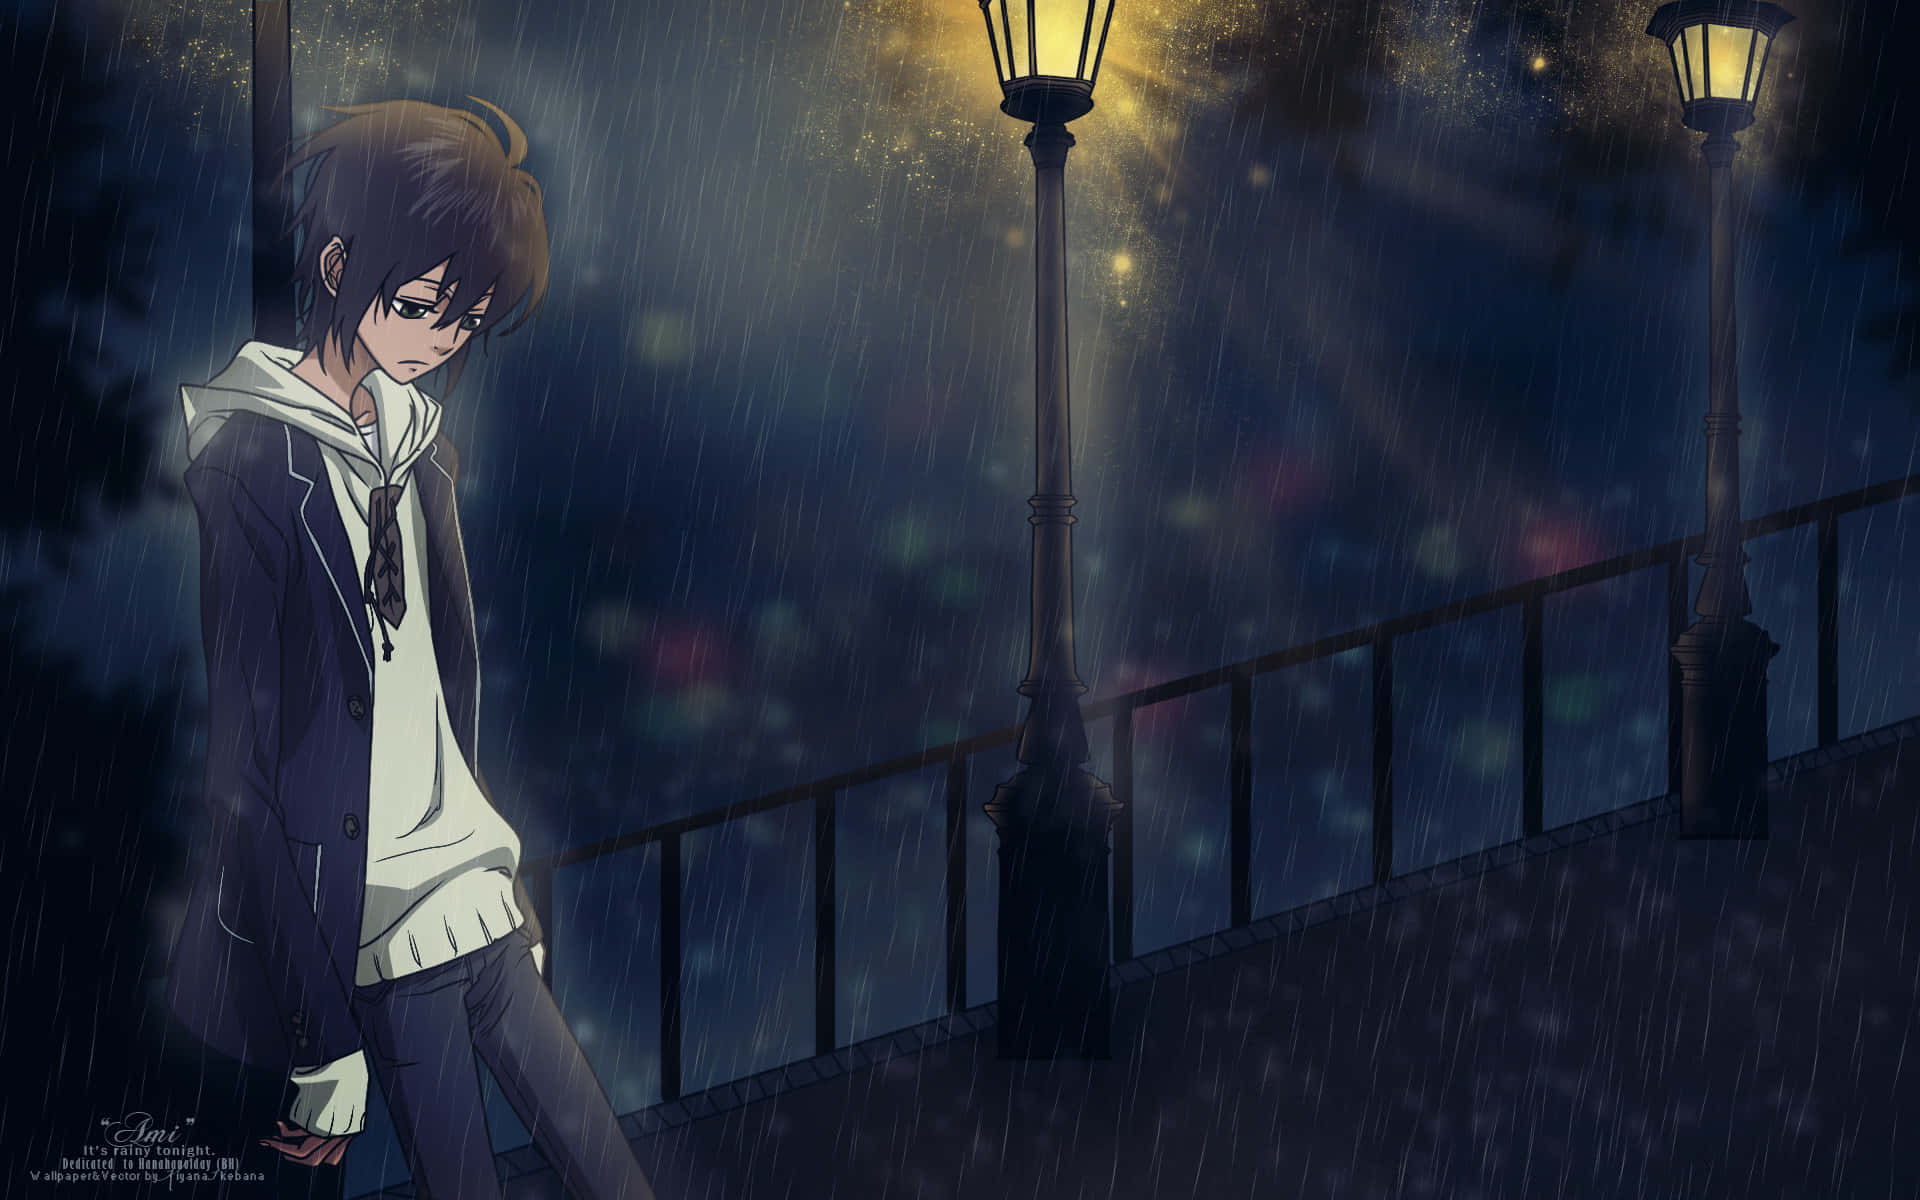 A deep sadness emanating from this sad crying anime Wallpaper